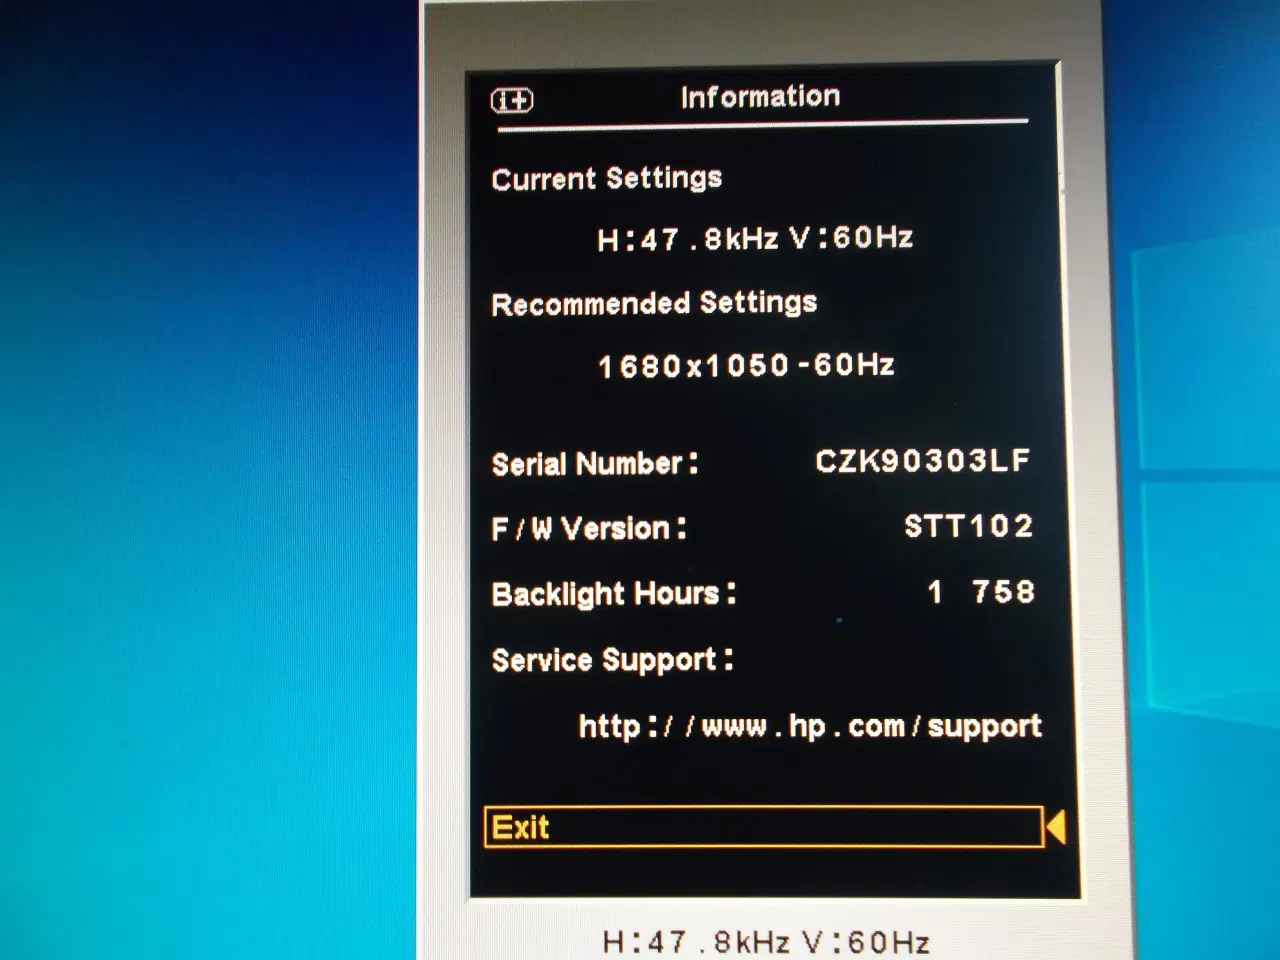 Billede 2 - HP LP2245wg 22" widescreen LCD skærm med USB 2.0